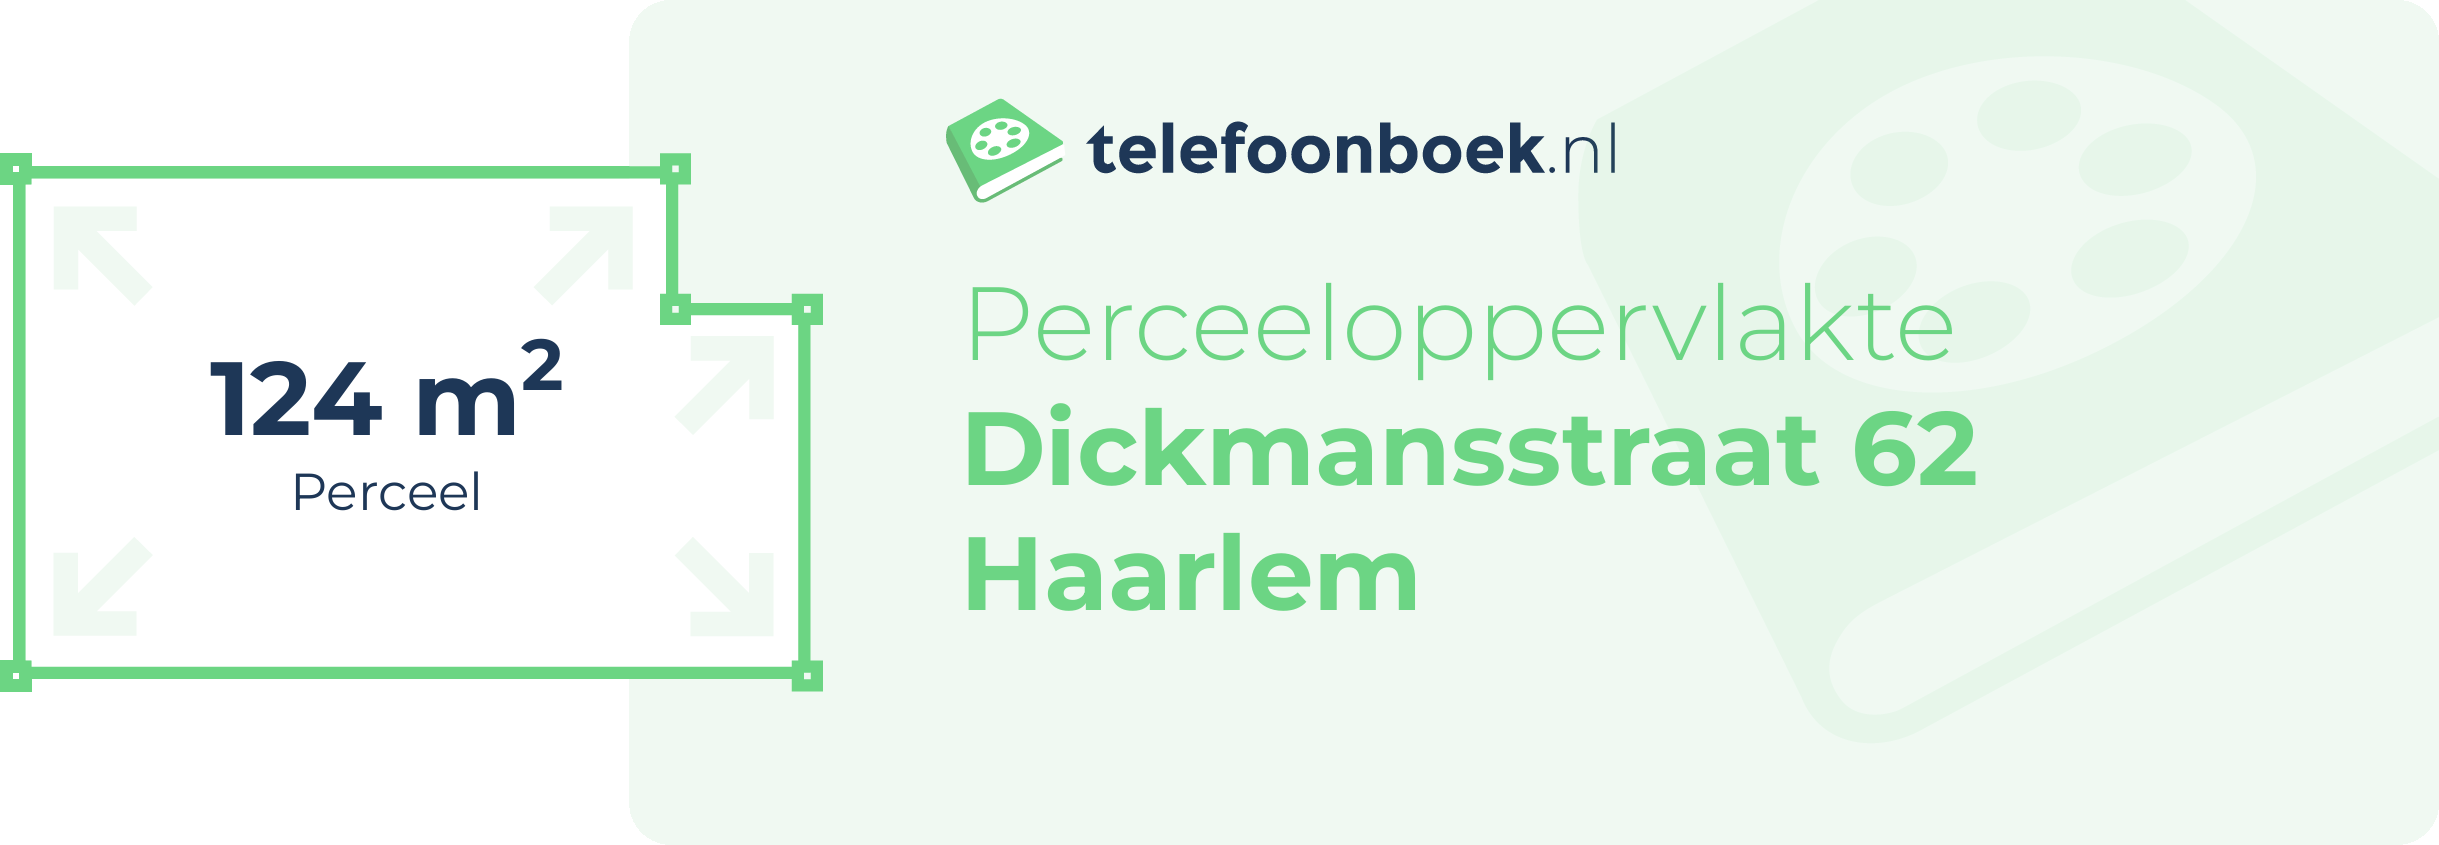 Perceeloppervlakte Dickmansstraat 62 Haarlem